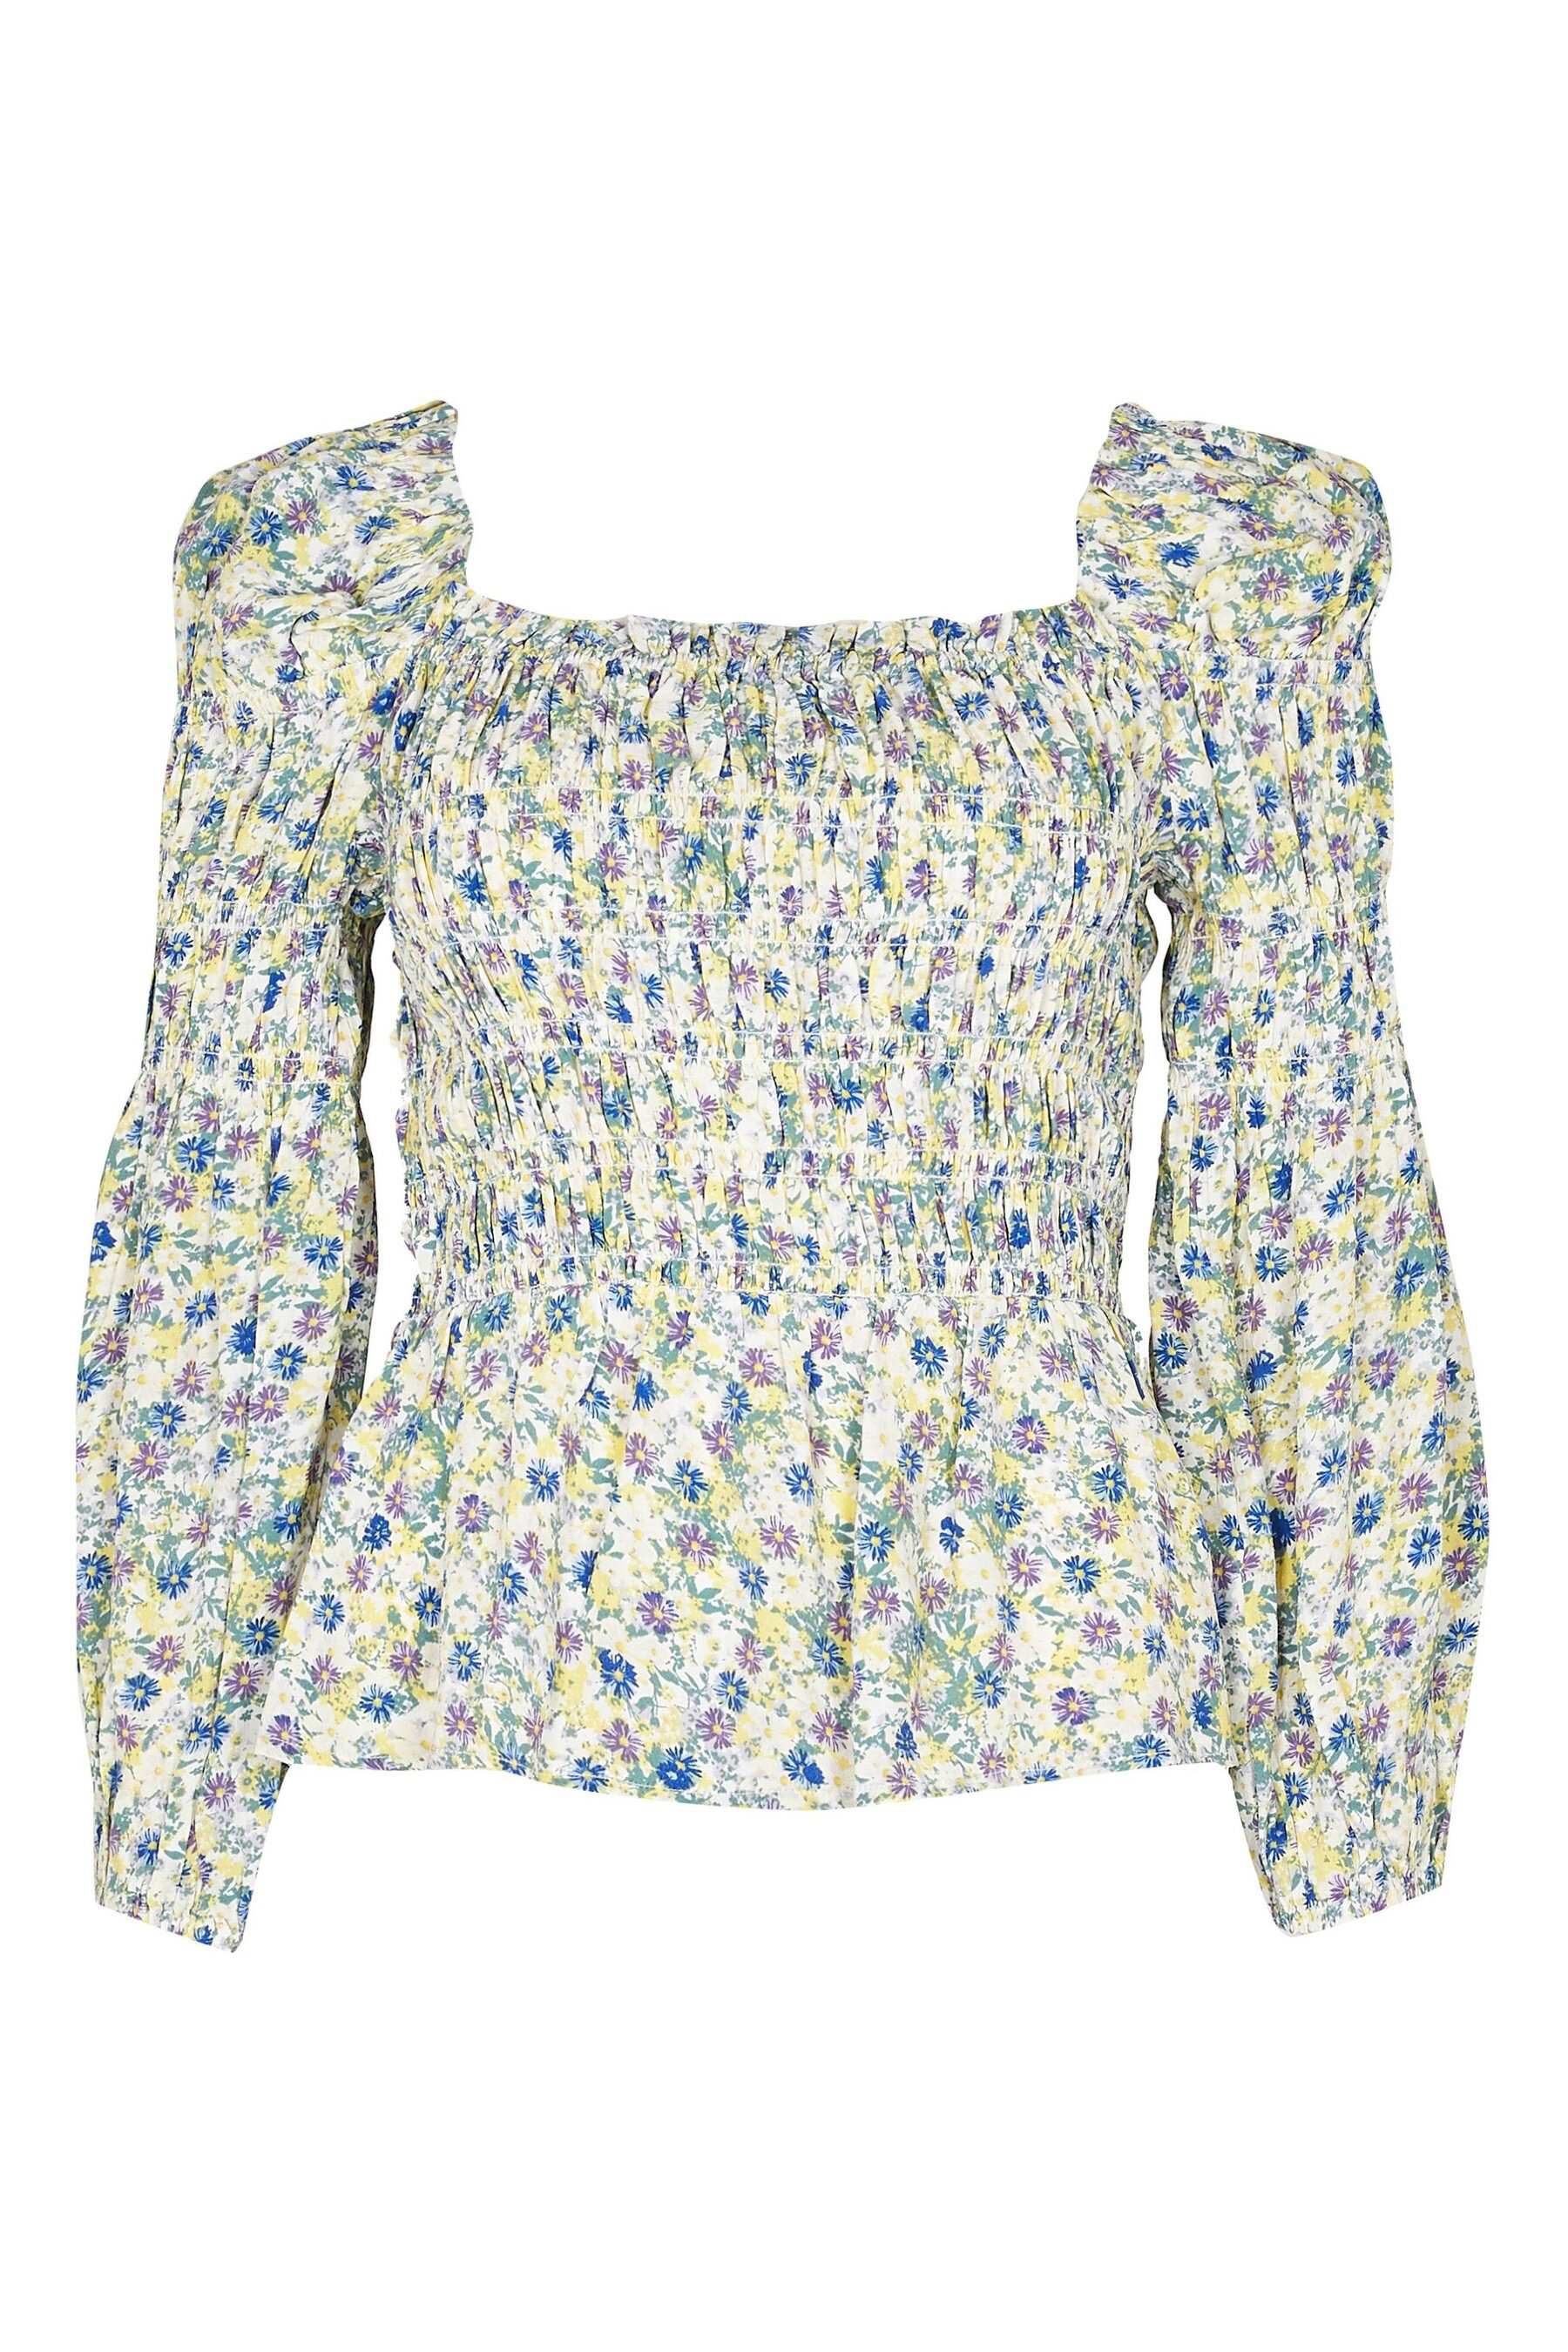 River Island blouse, £30.jpg